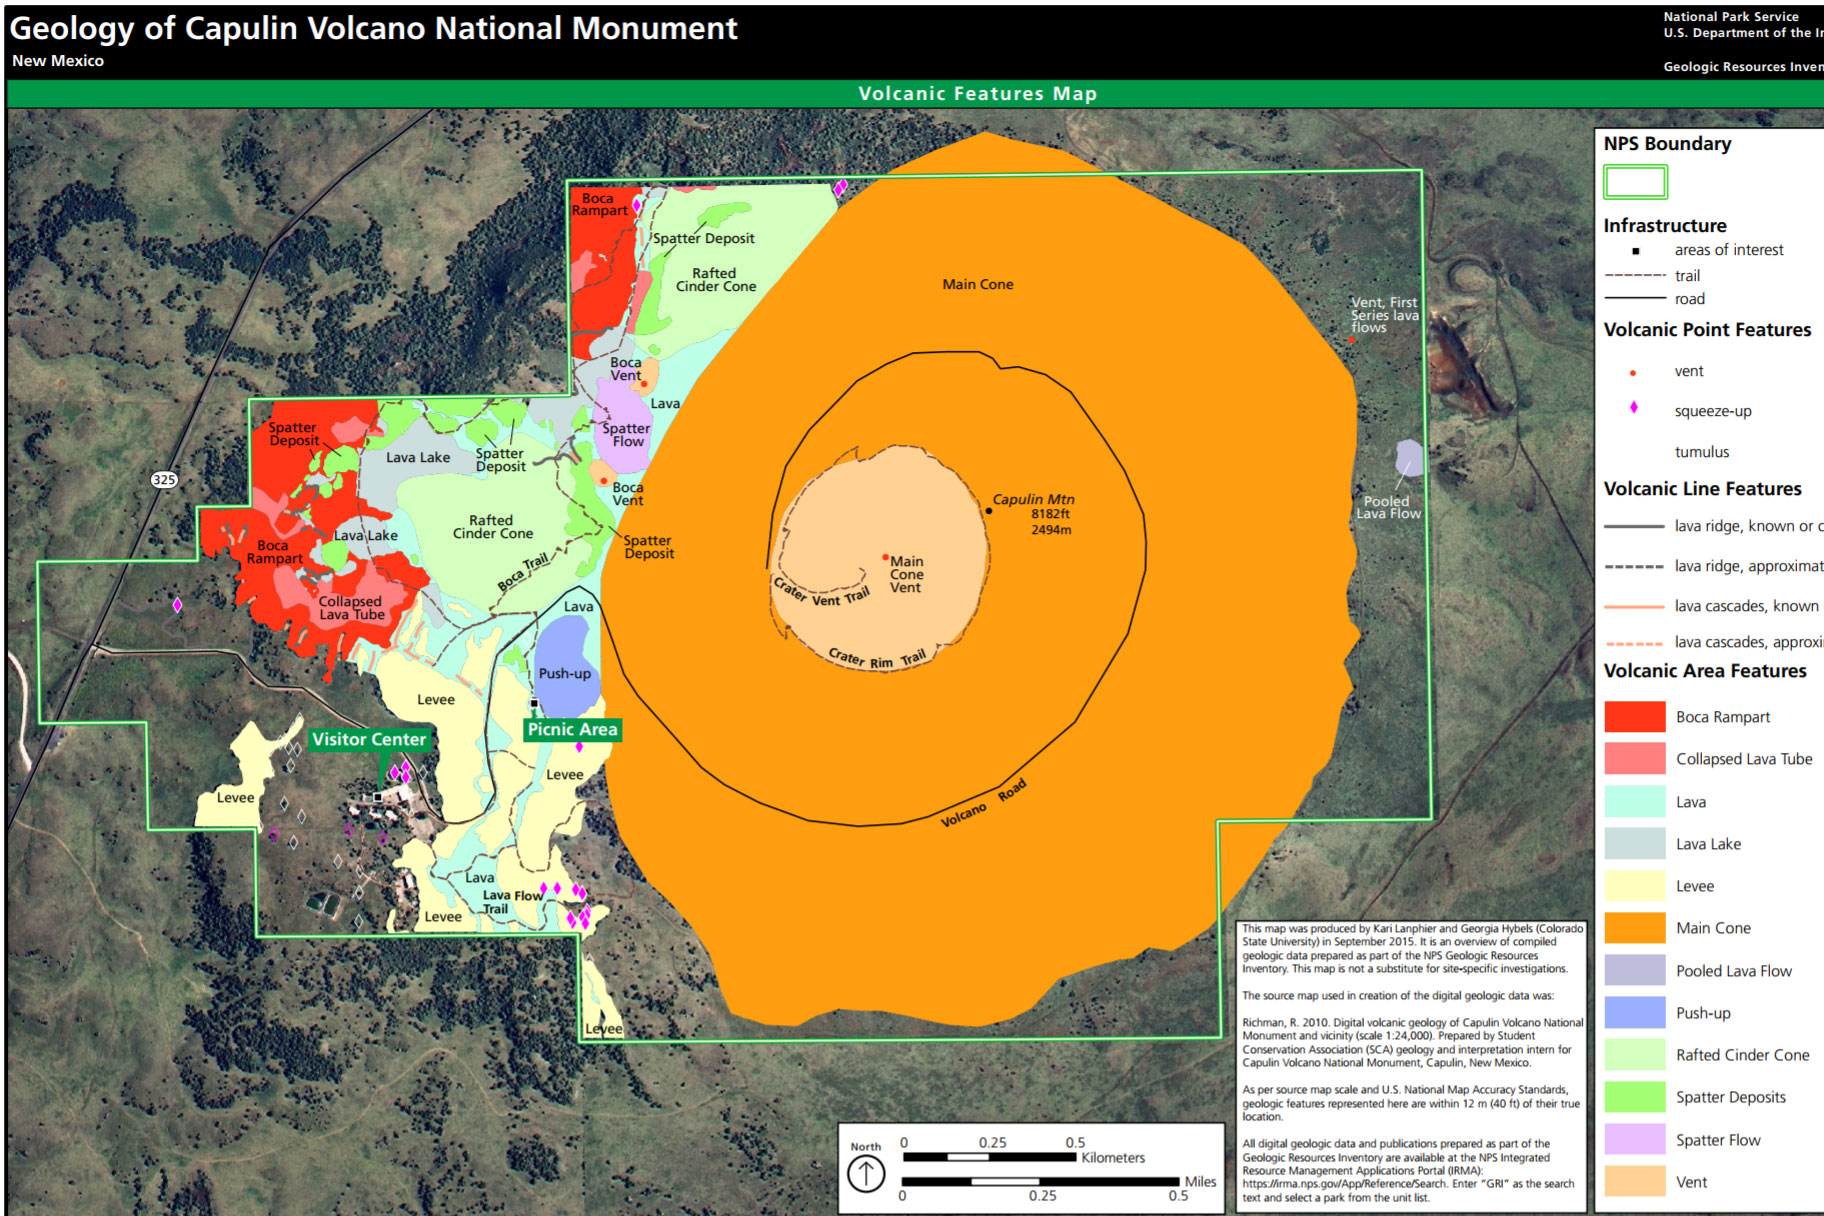 NPS Geodiversity Atlas—Capulin Volcano National Monument, New Mexico (U